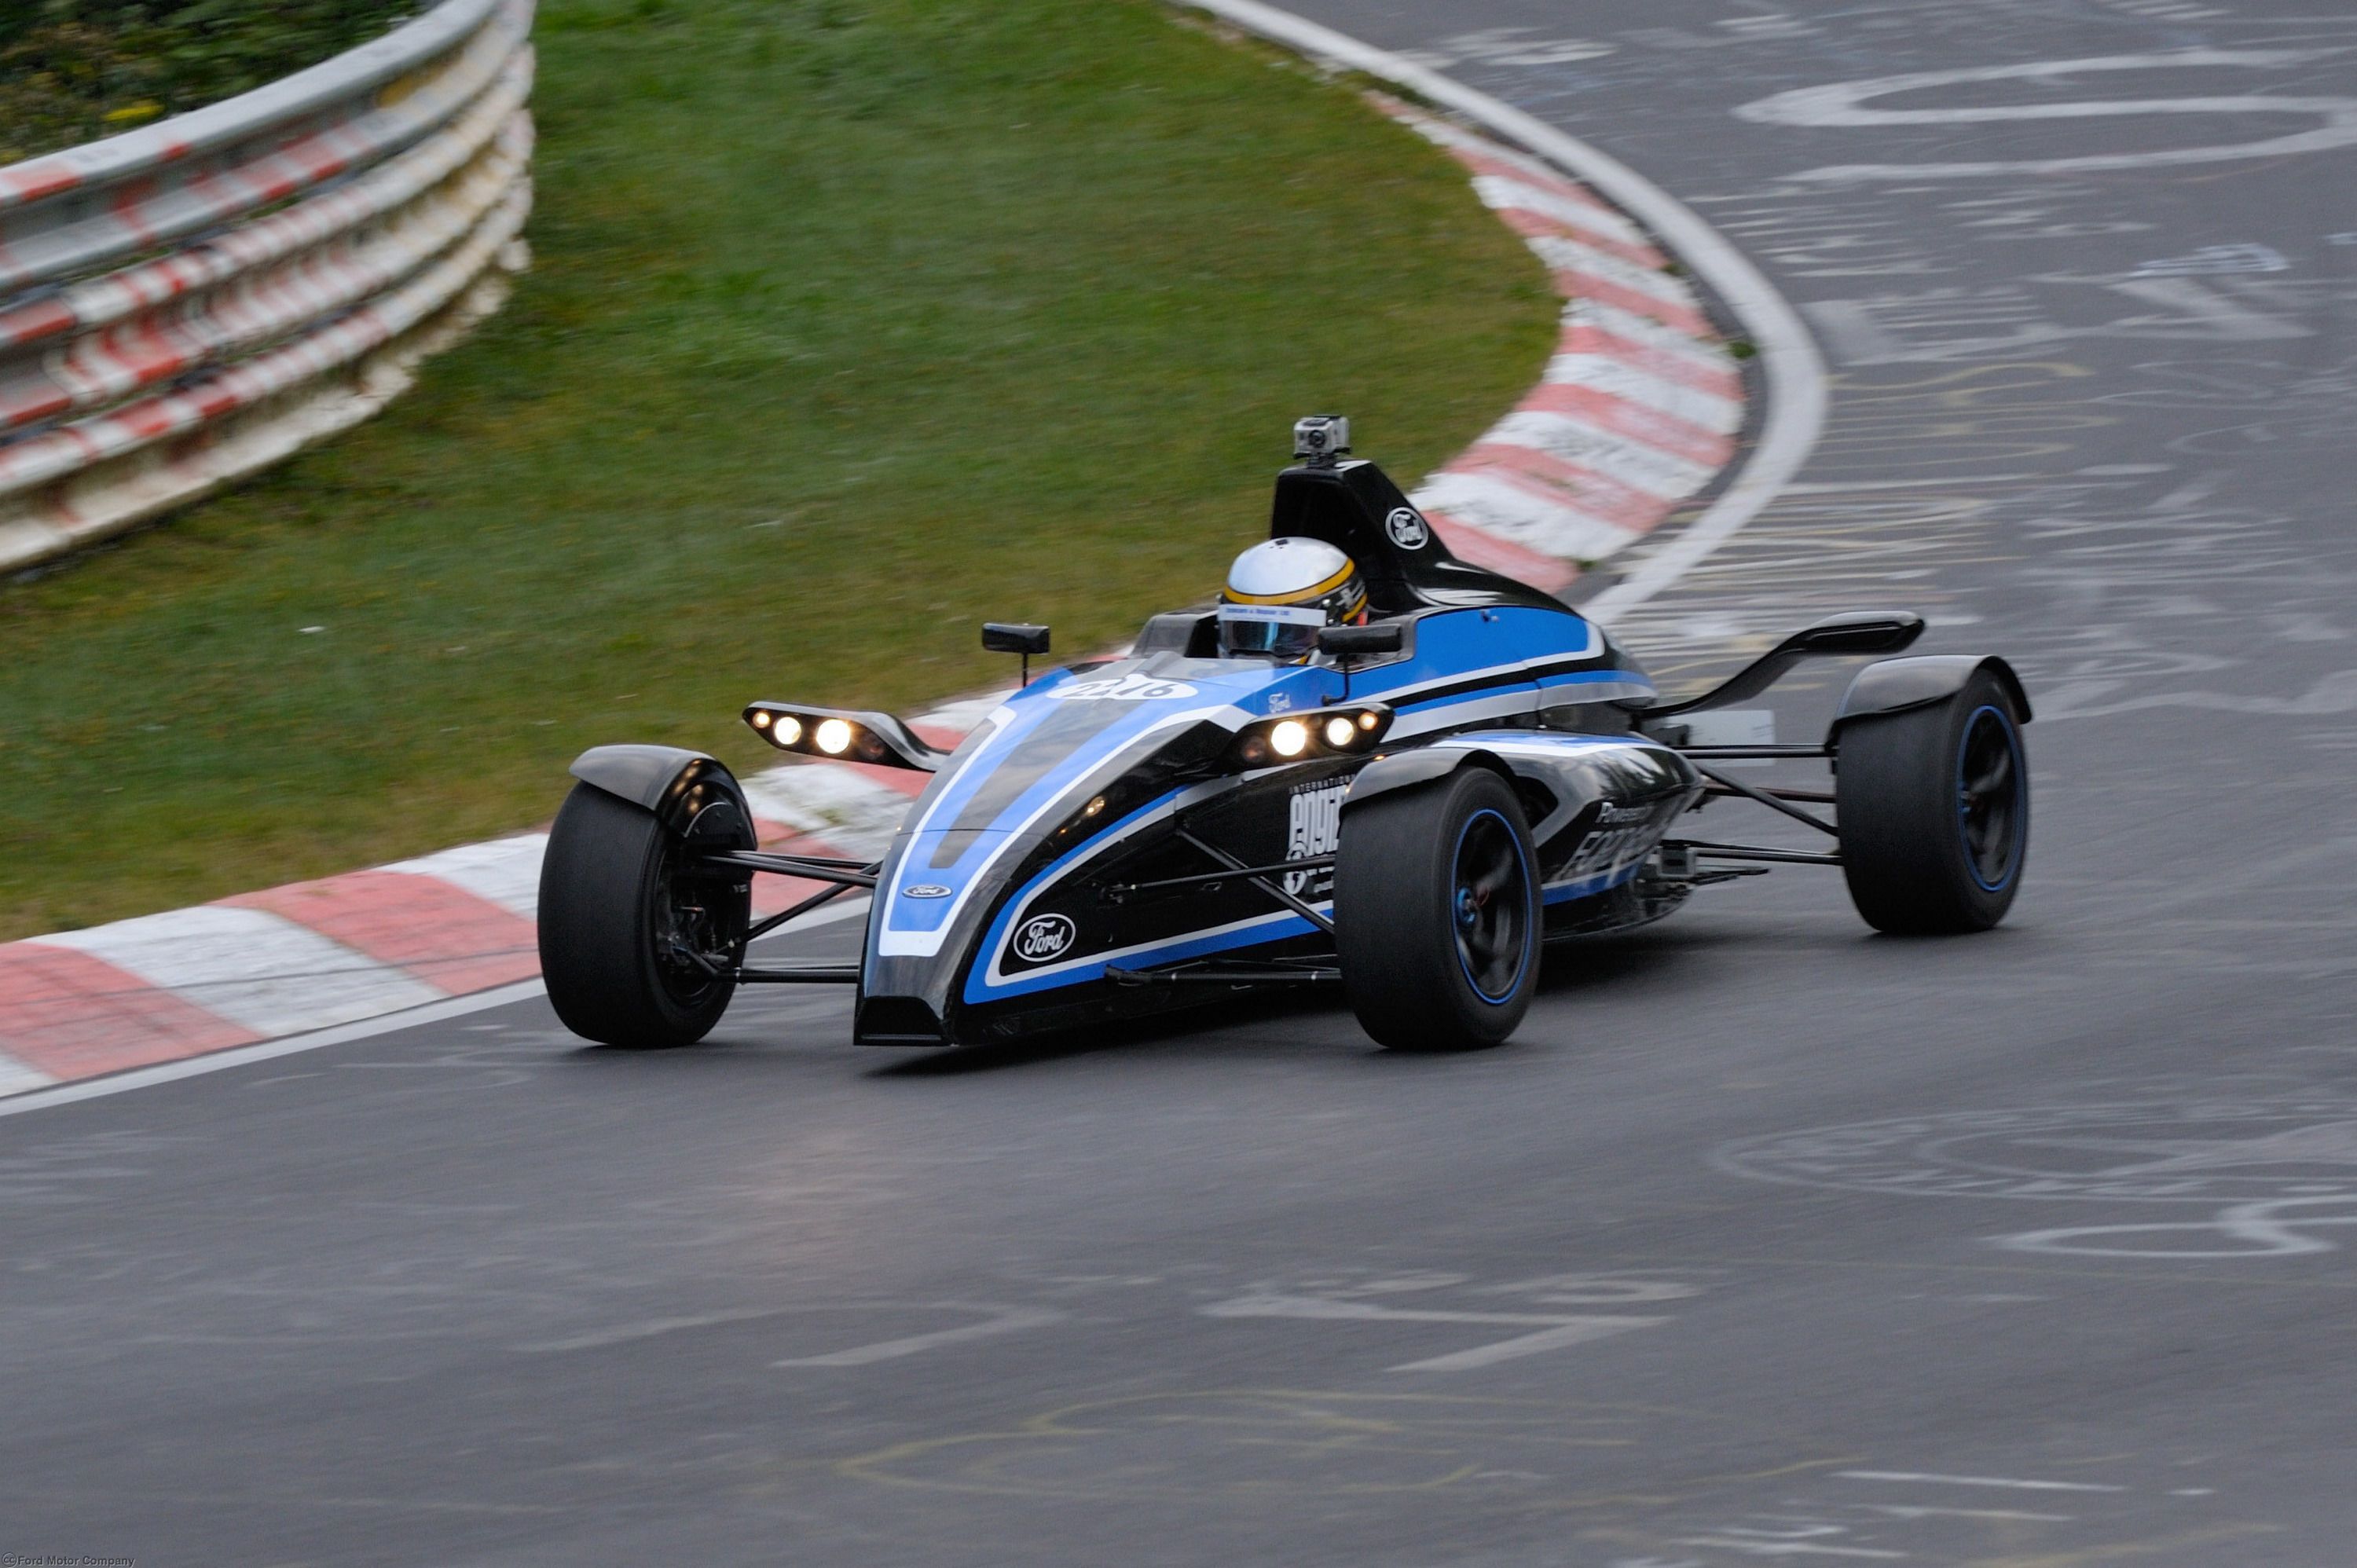 2012 Formula Ford Race Car